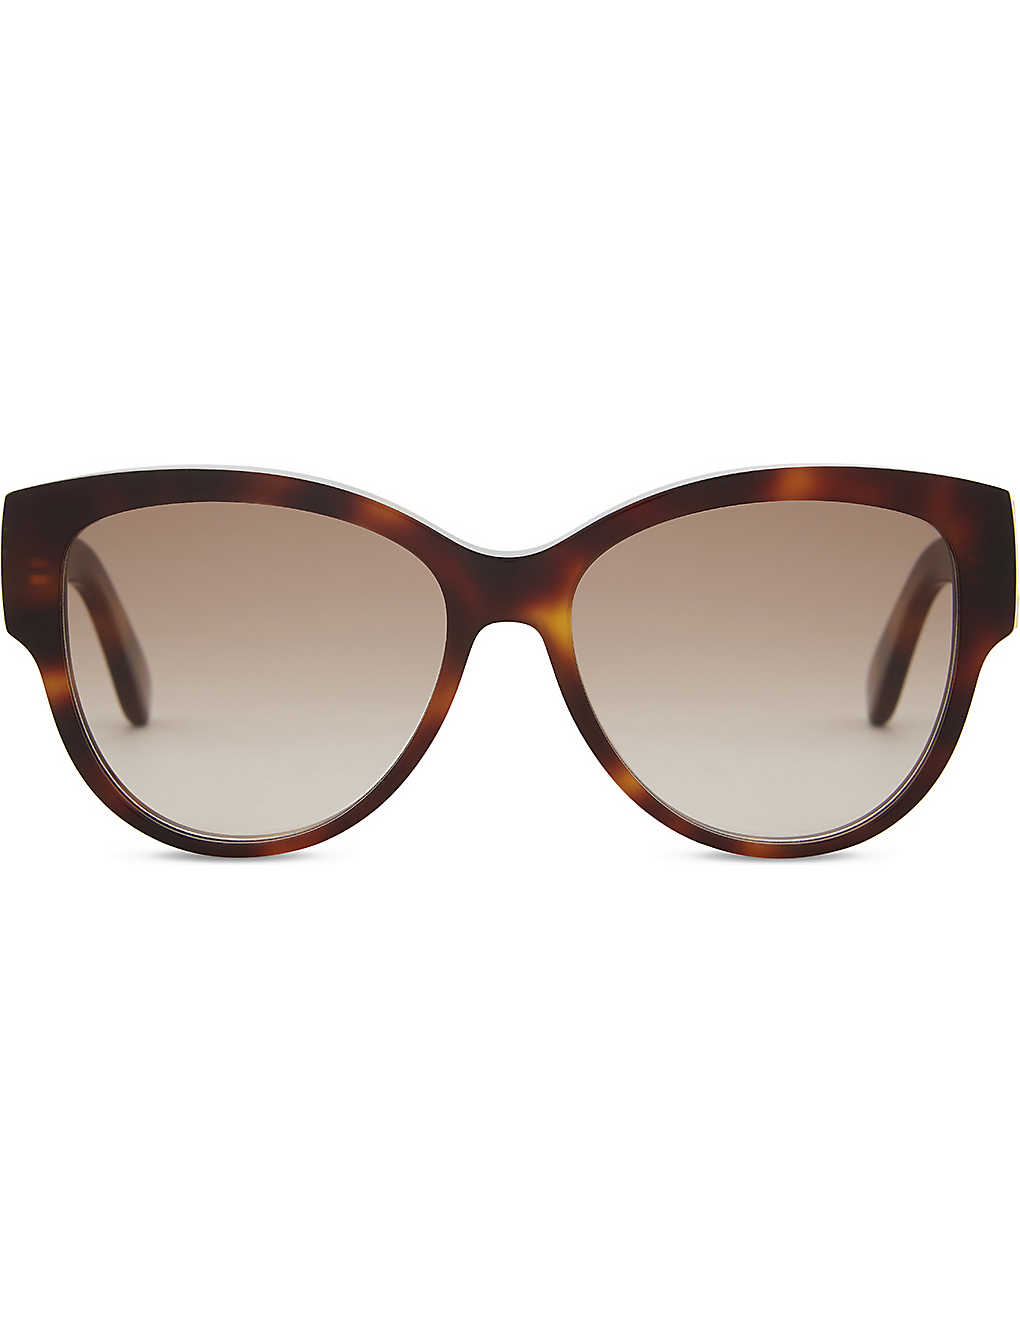 M3 tortoiseshell oval-frame sunglasses(5697878)